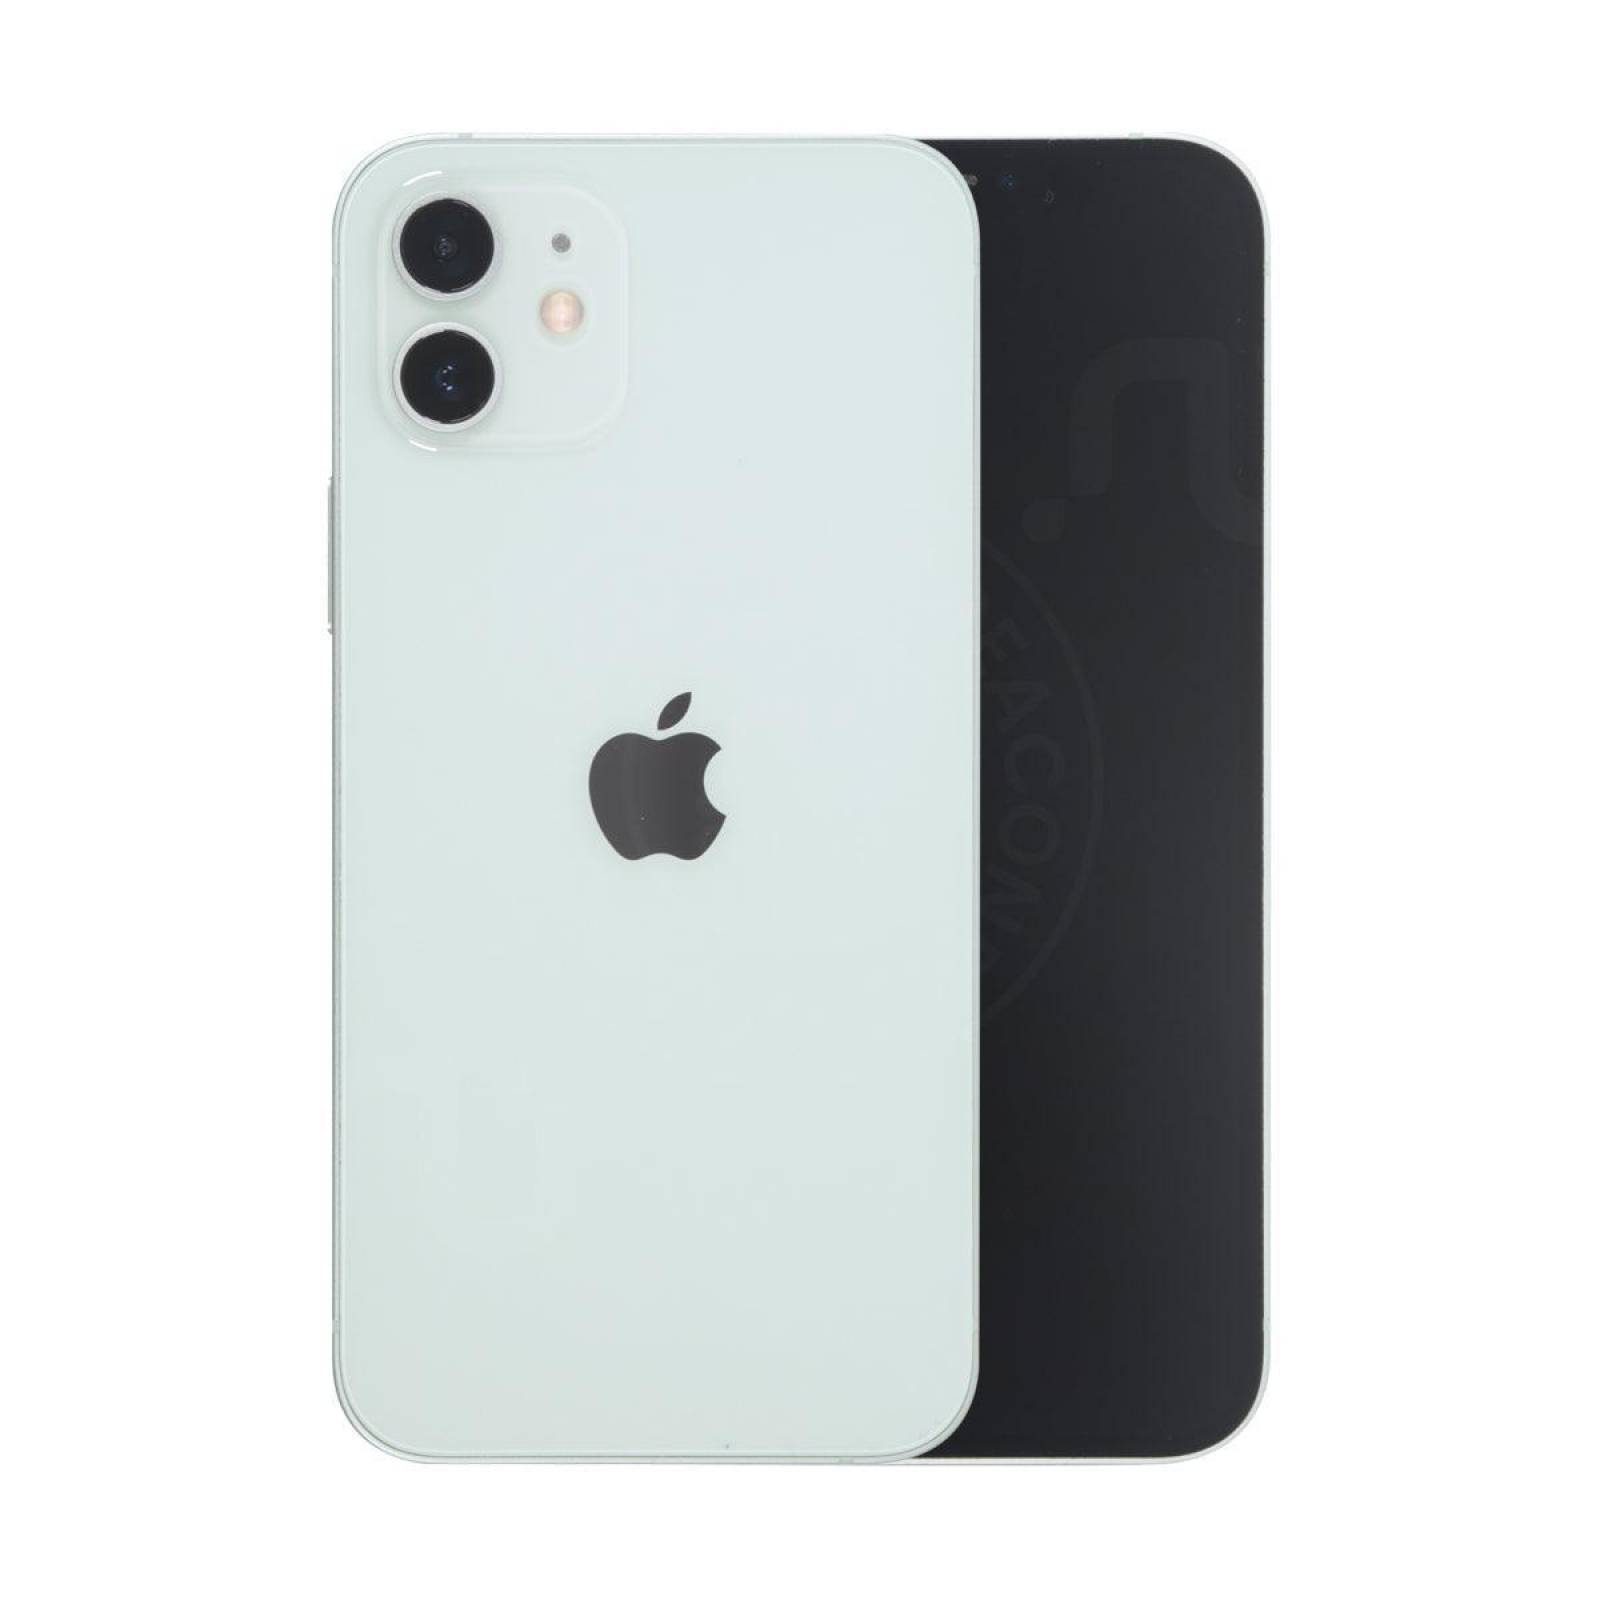 Celular Apple iPhone 12 128gb Reacondicionado Grado A Verde